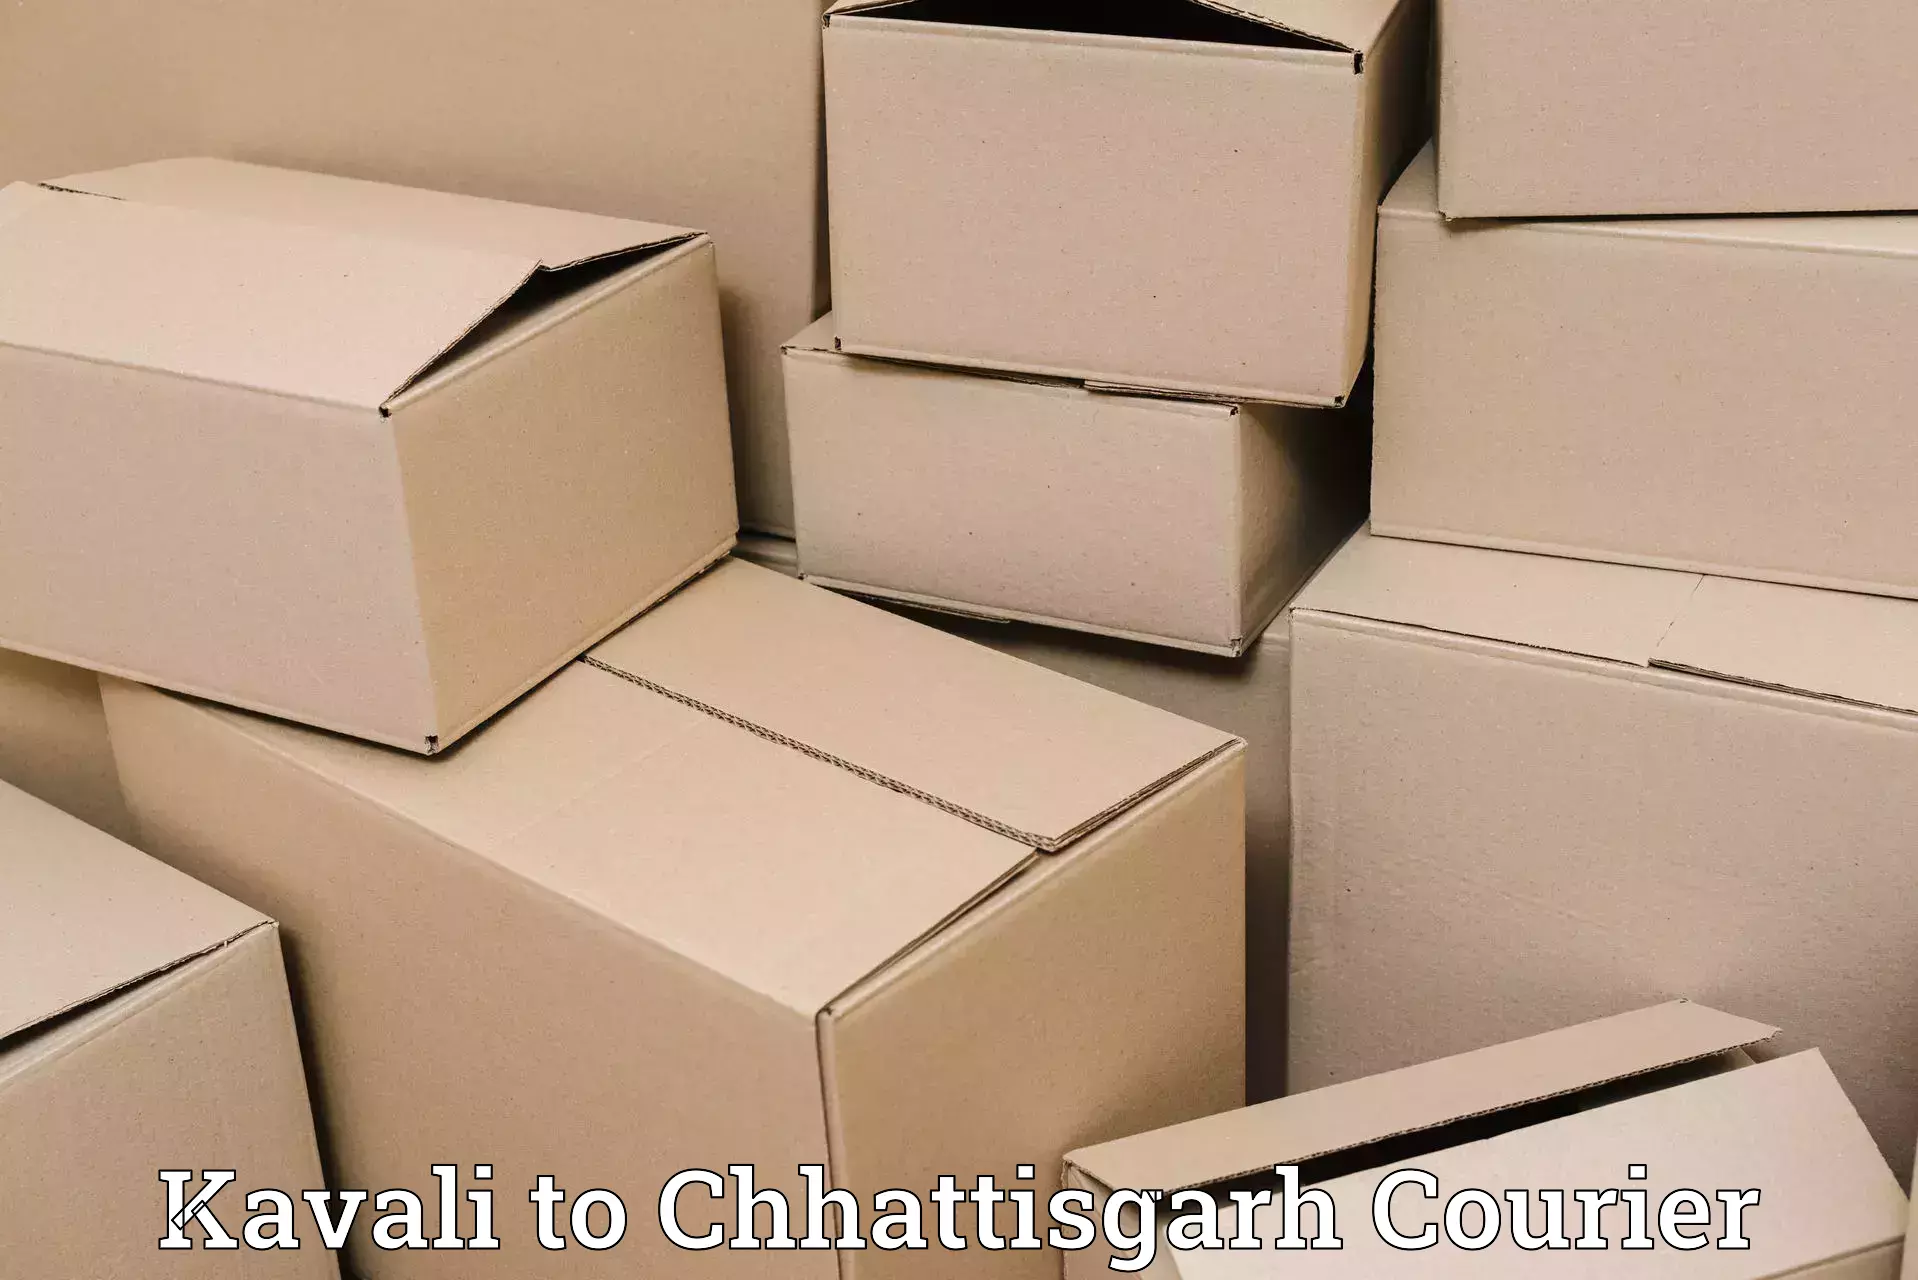 Courier service innovation Kavali to Dabhra